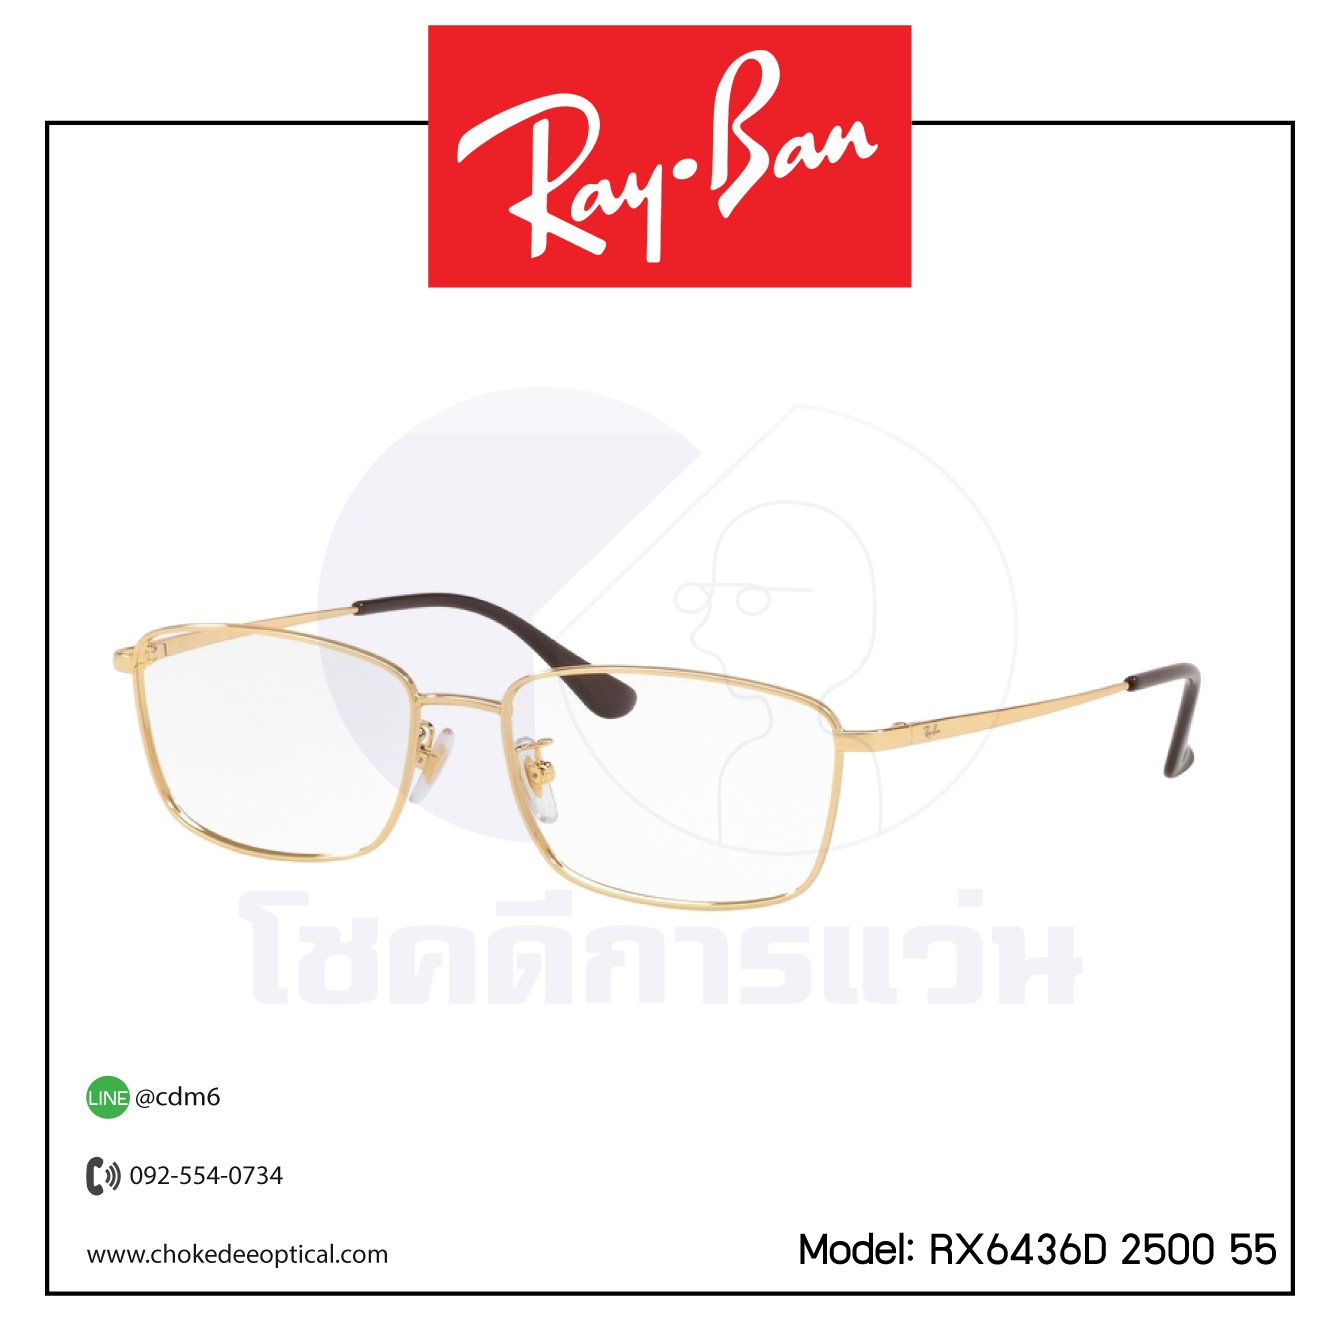 Rayban RX6436D 2500 55